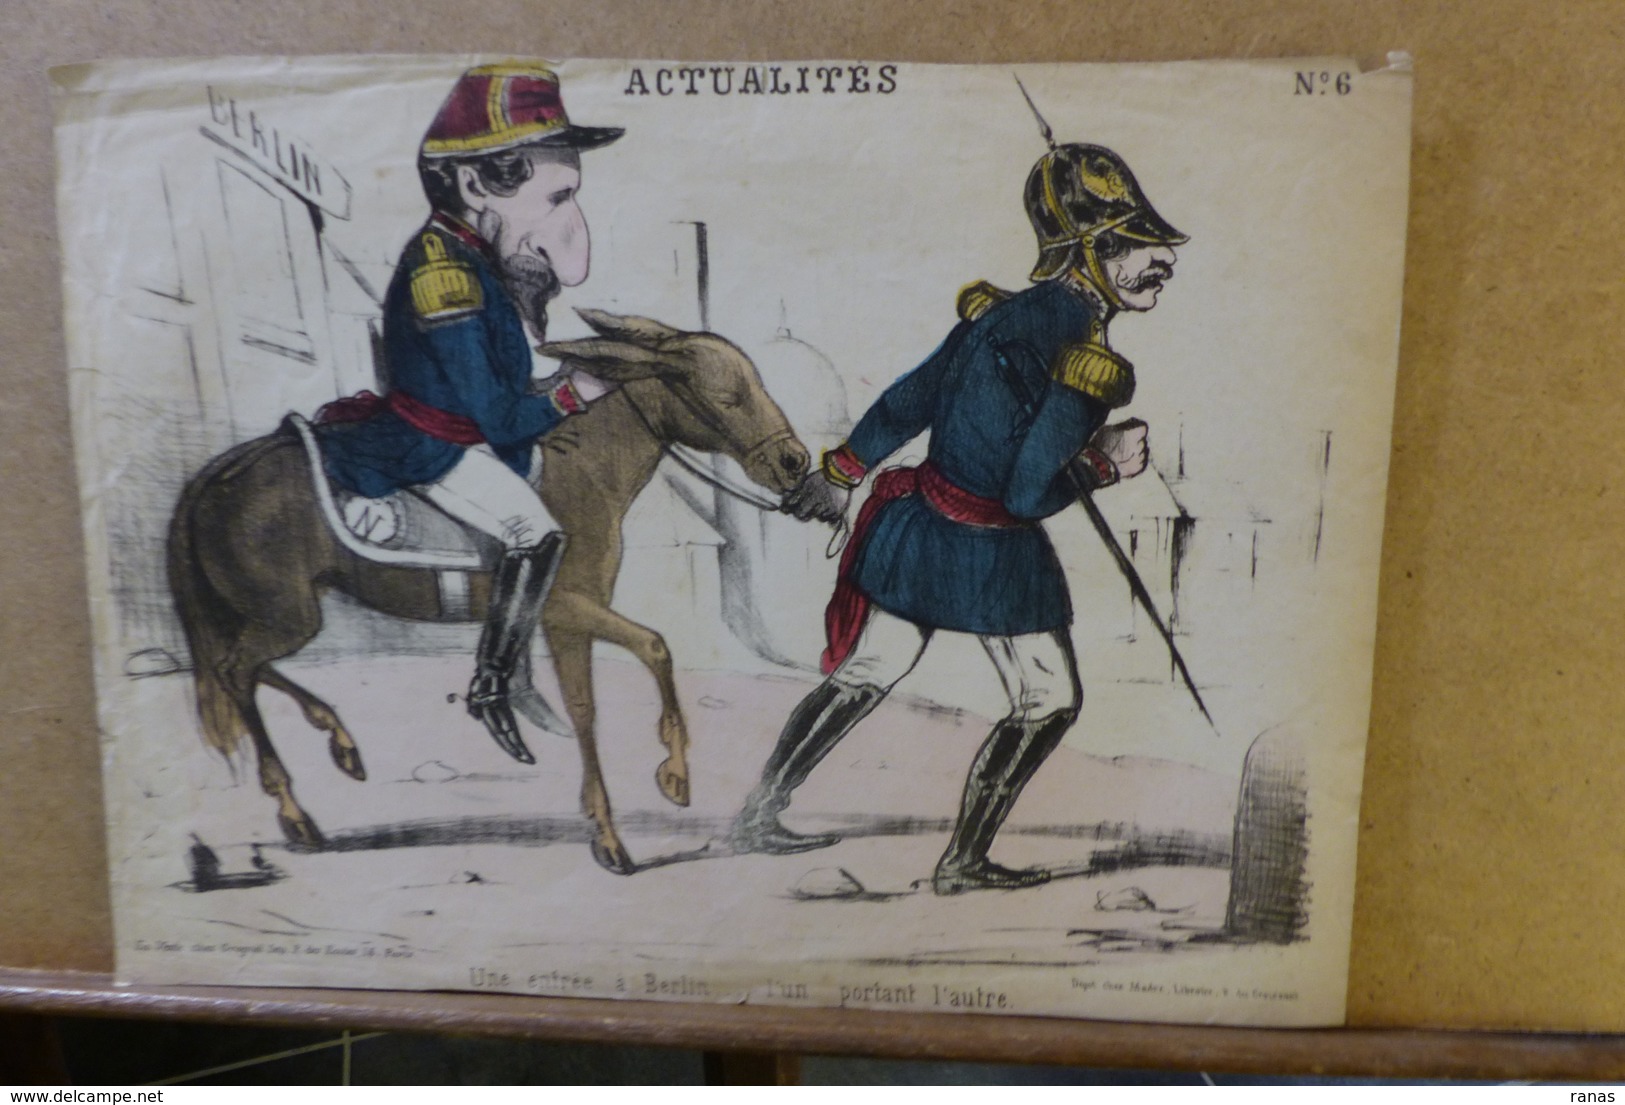 Estampe Gravure Satirique Caricature D'époque 1870 Bismarck Napoléon III 34 X 25 Ane - Stiche & Gravuren